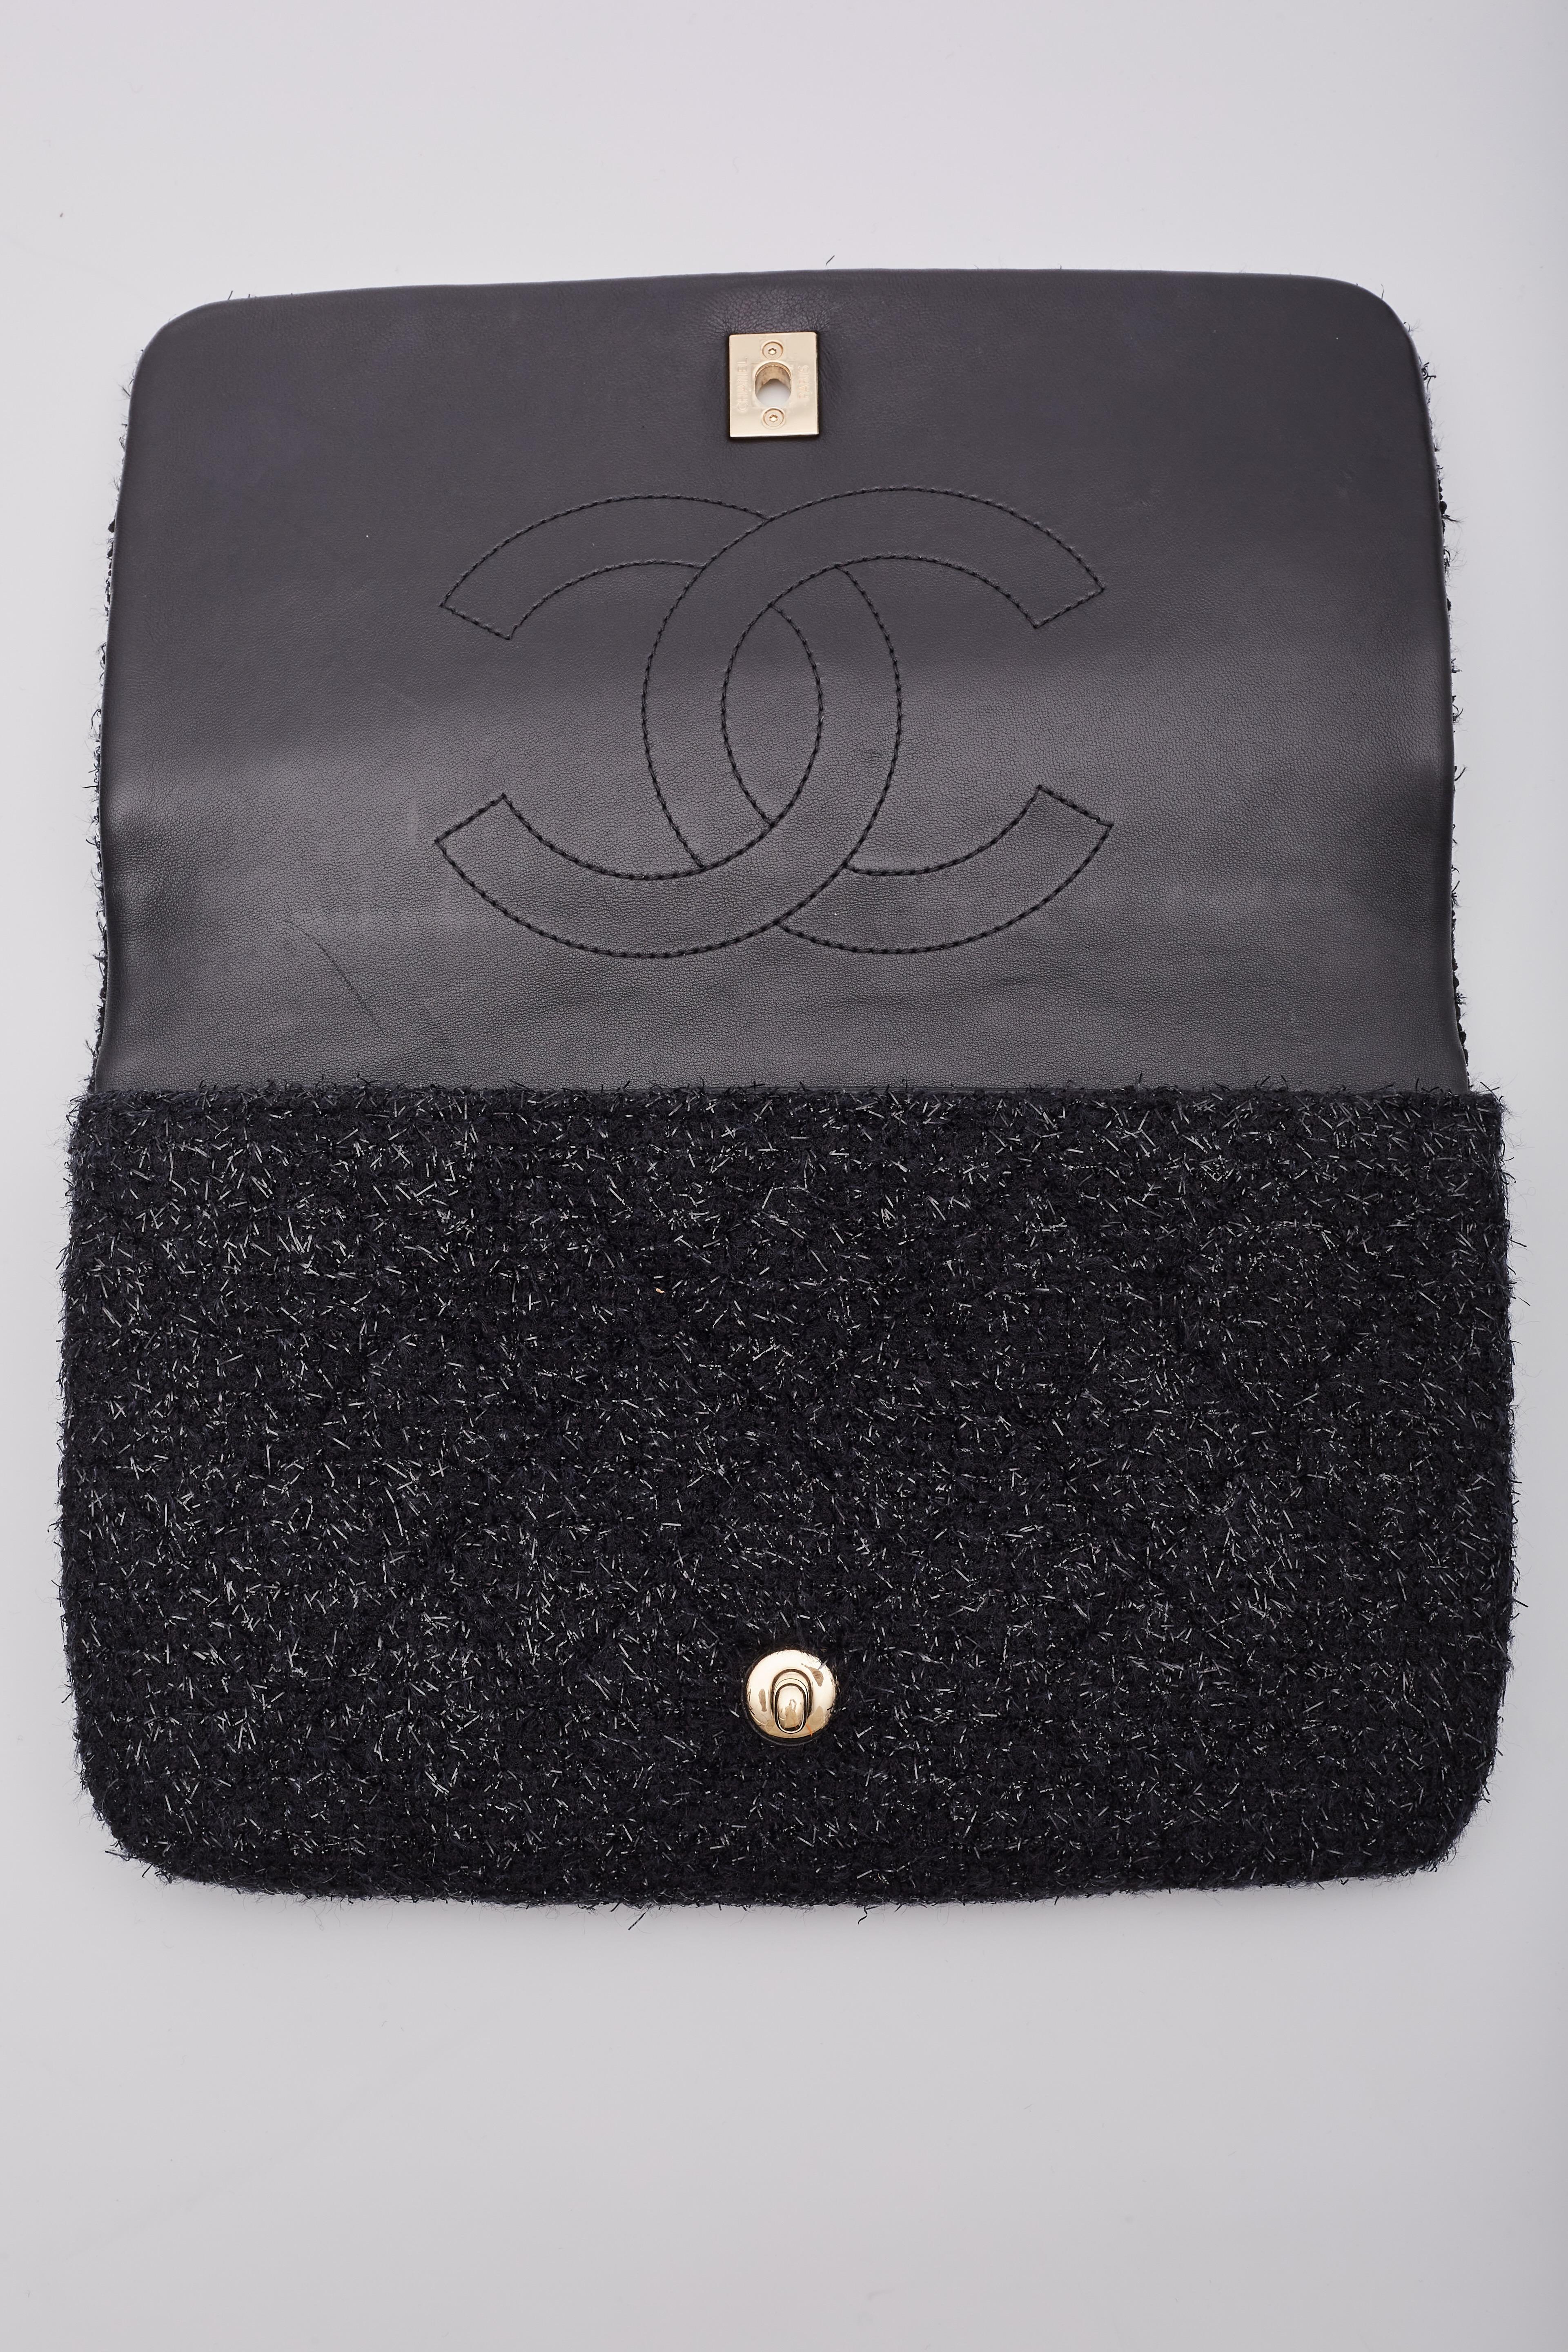 Chanel Paris Cosmopolite Pearl Fantasy Tweed Flap Clutch Bag For Sale 9